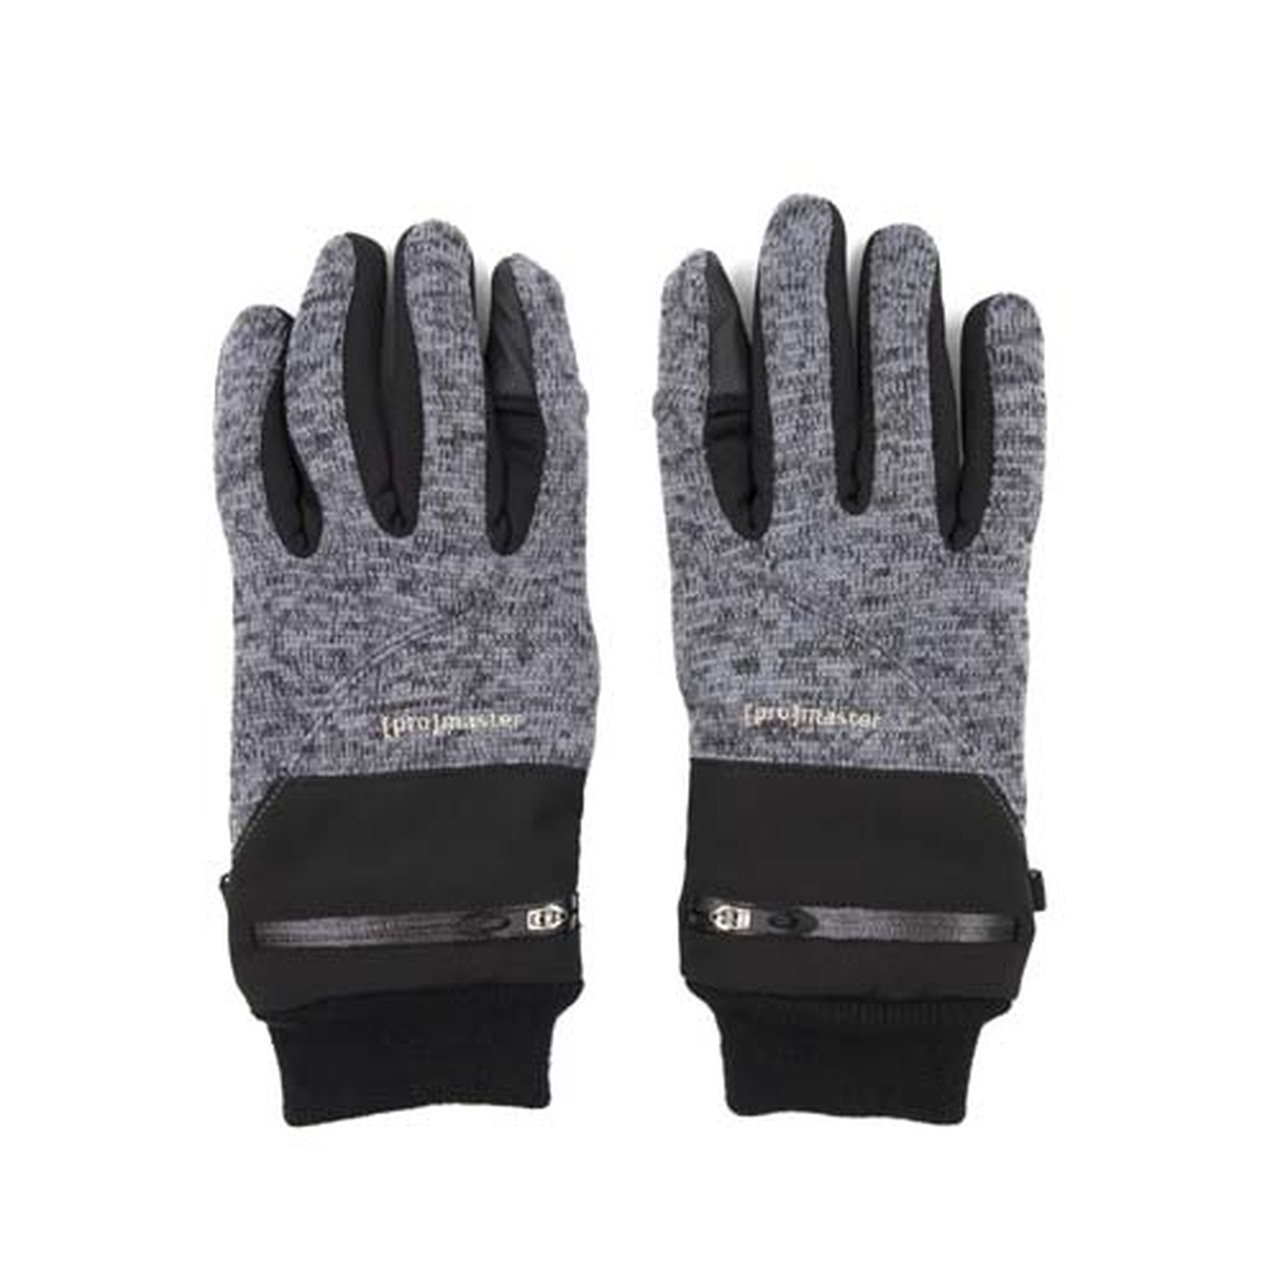 Promaster 7458 Knit Photo Gloves - Medium v2